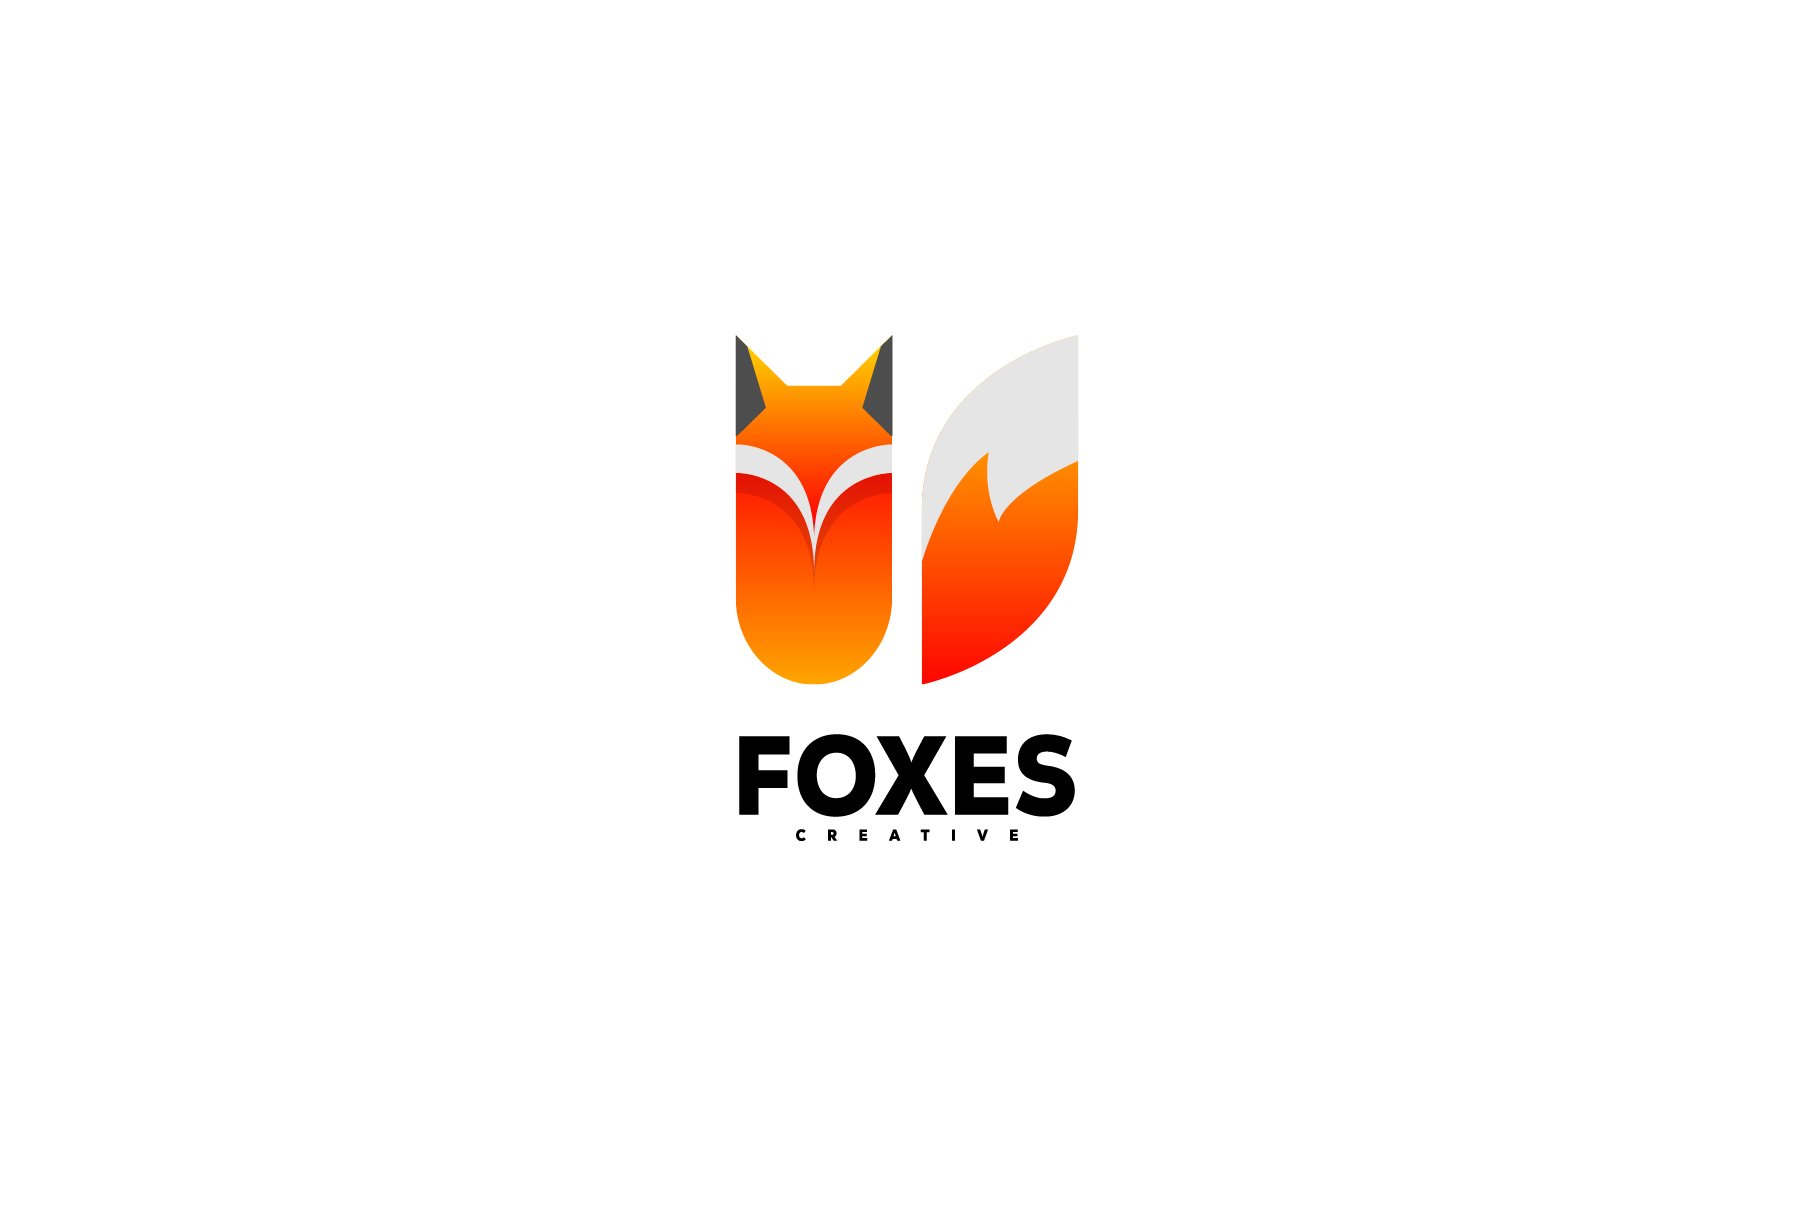 foxes design illustration logo color cover image.